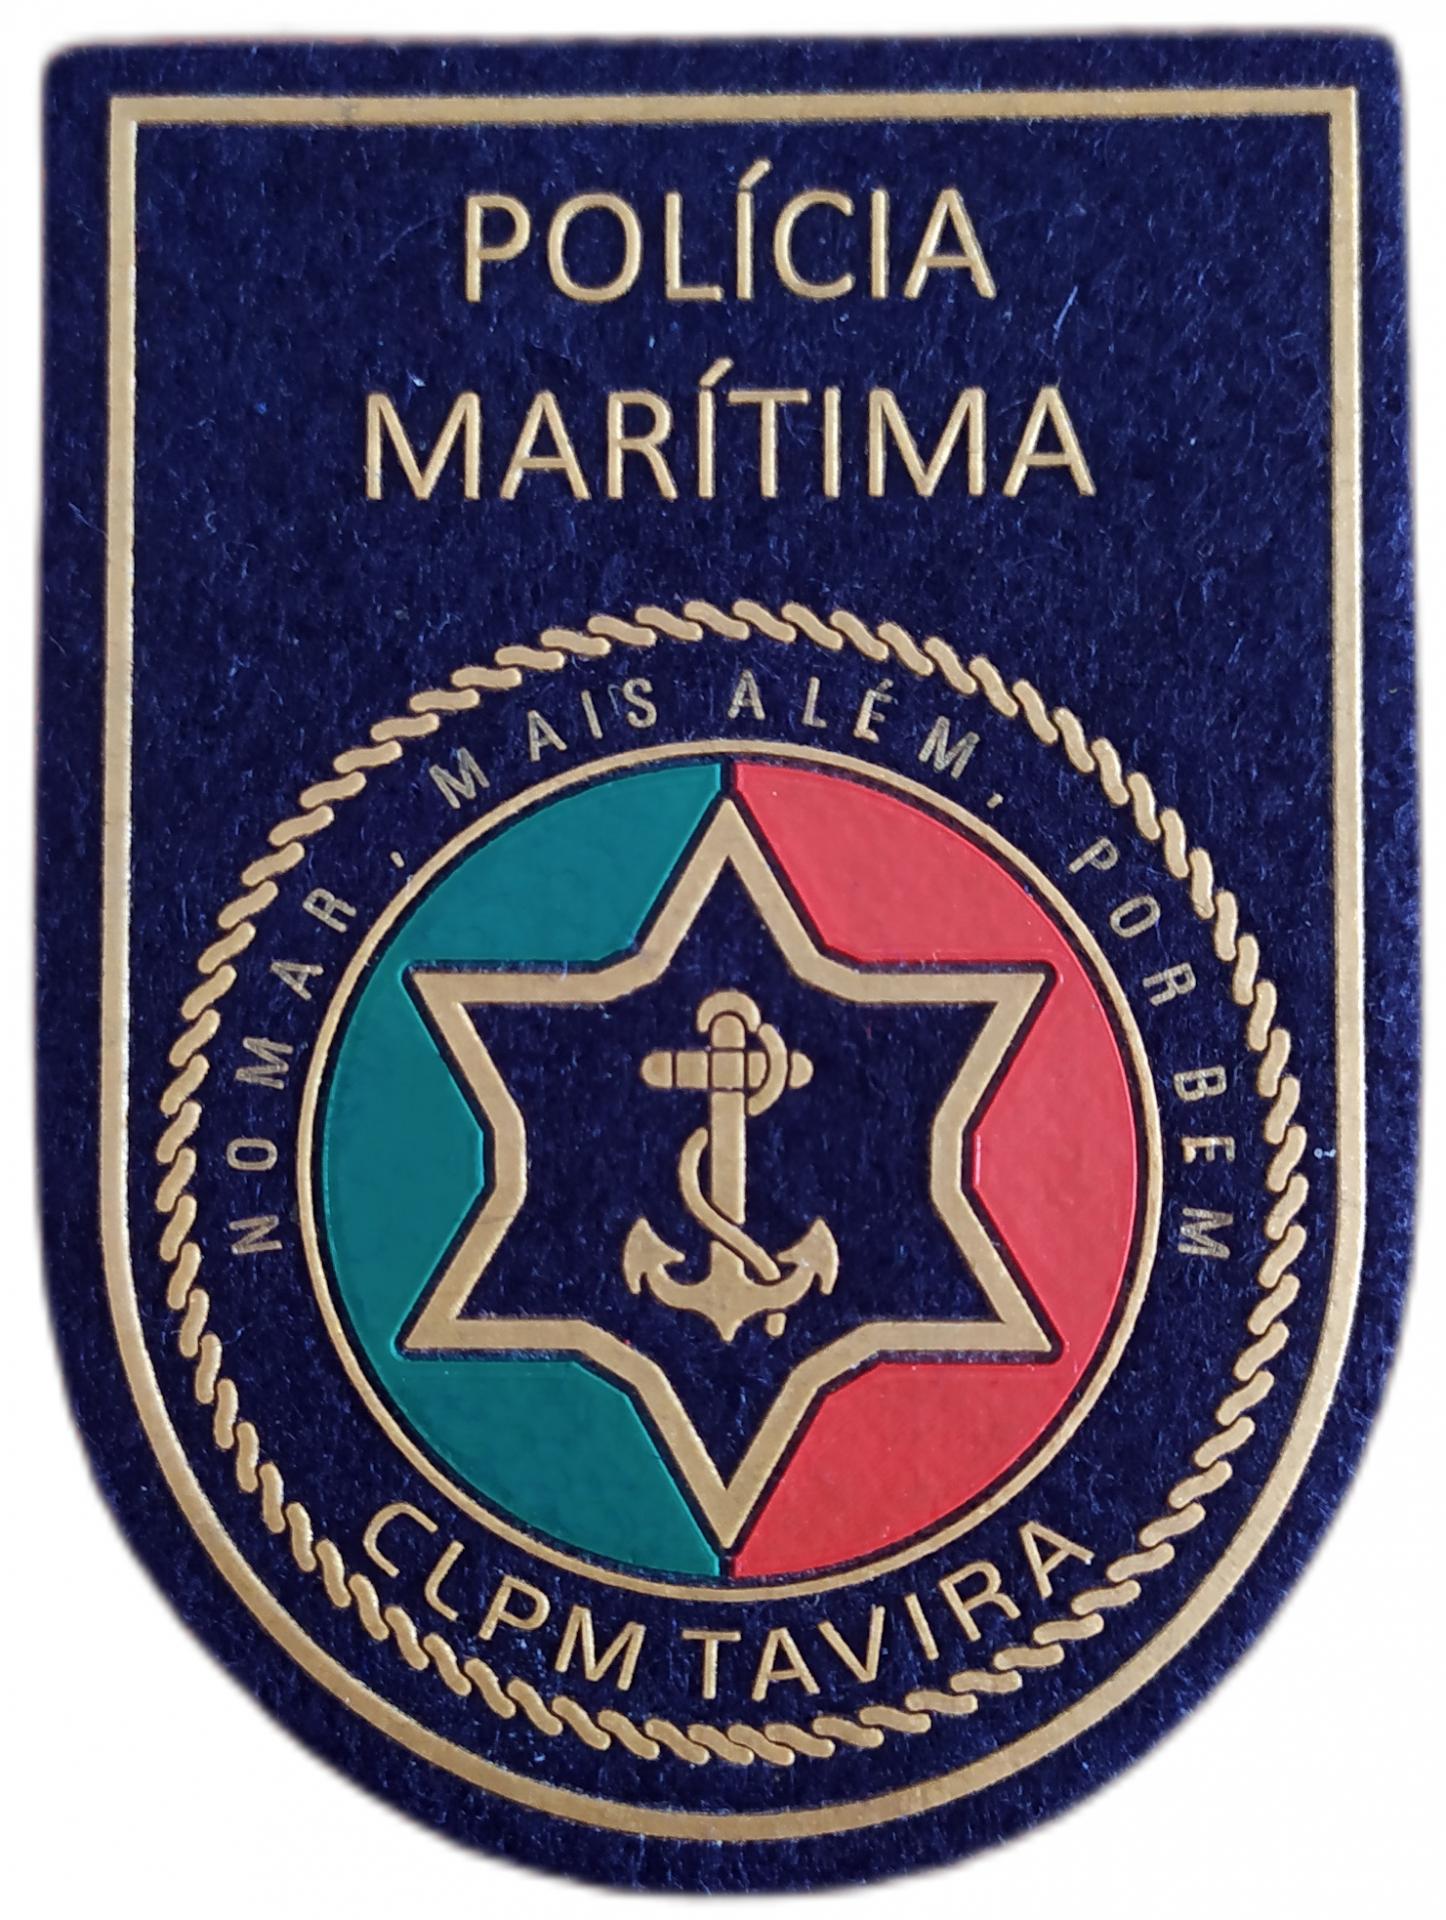 Policía Marítima de Portugal CLPM Tavira parche insignia emblema distintivo Sea Police